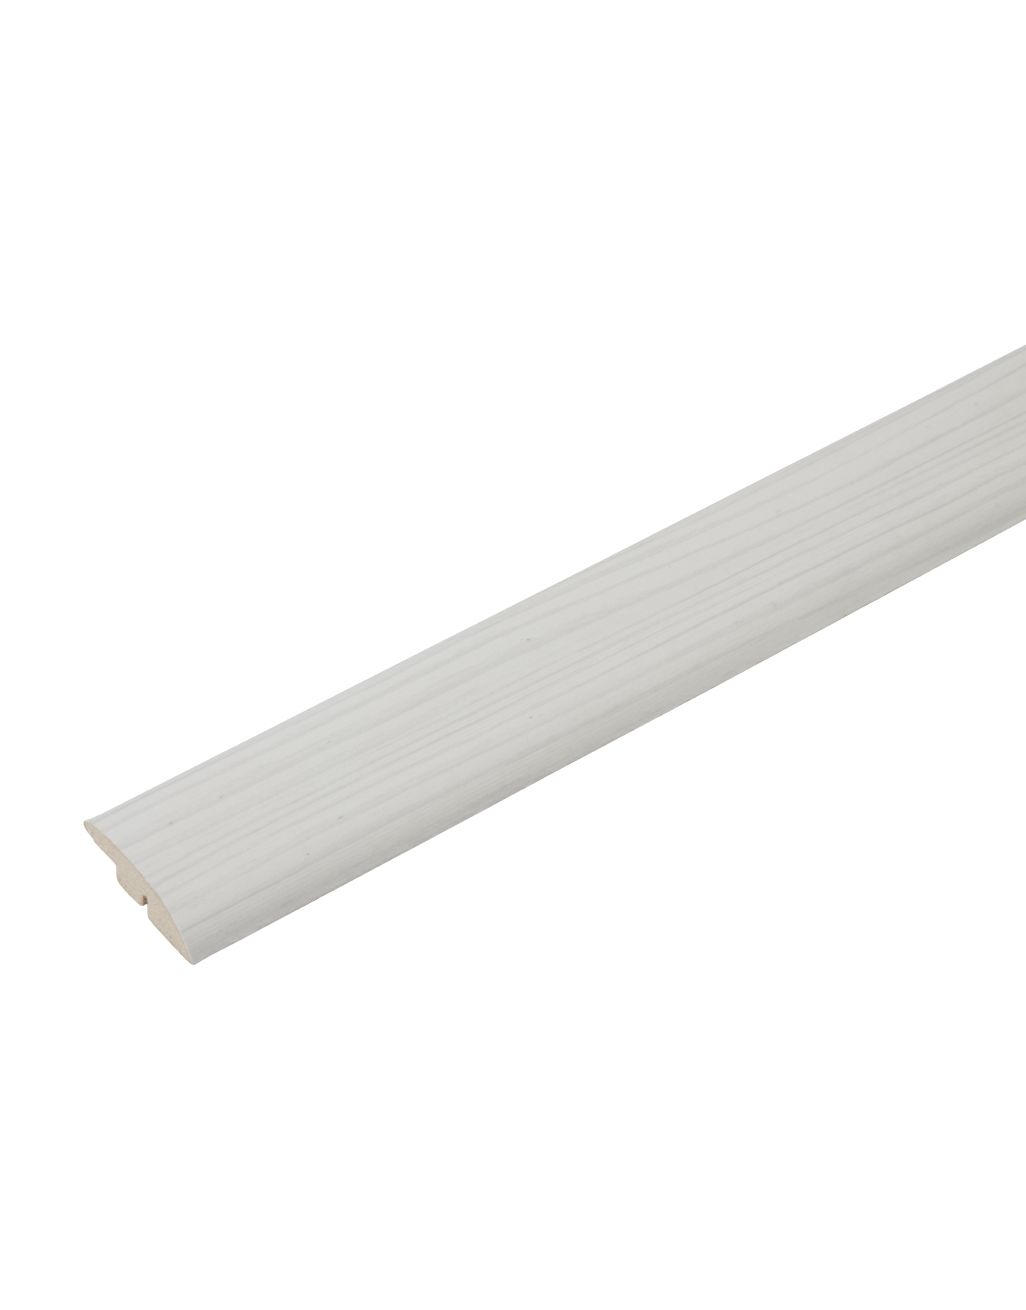 FC56 - White Wood Ramp Profile 1